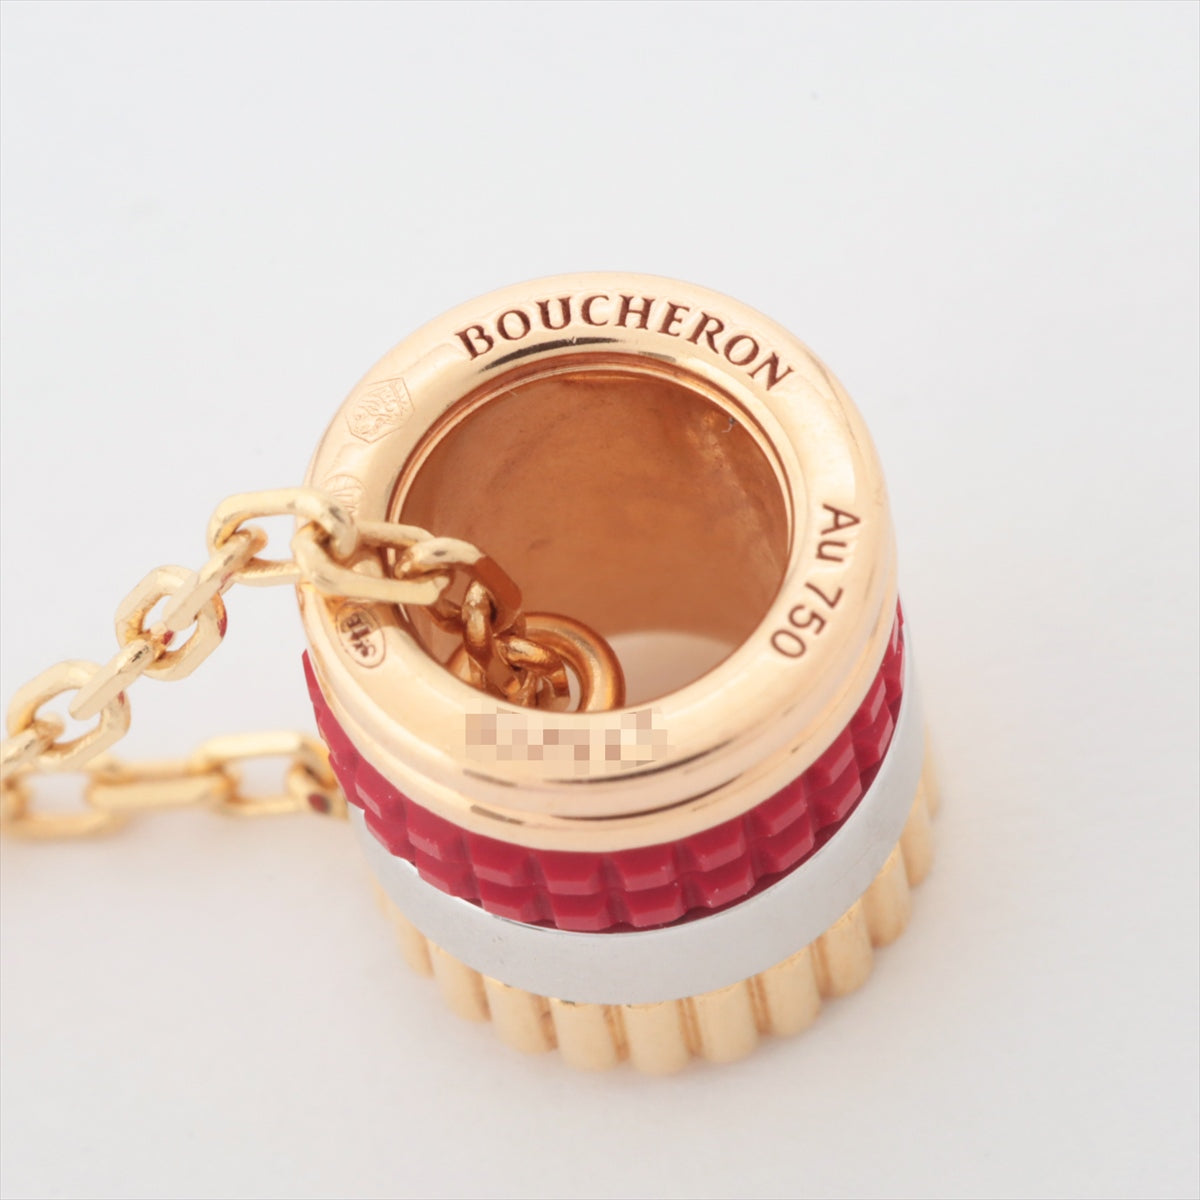 Boucheron Quatre Red diamond Necklace 750(YG×PG×WG) 5.2g